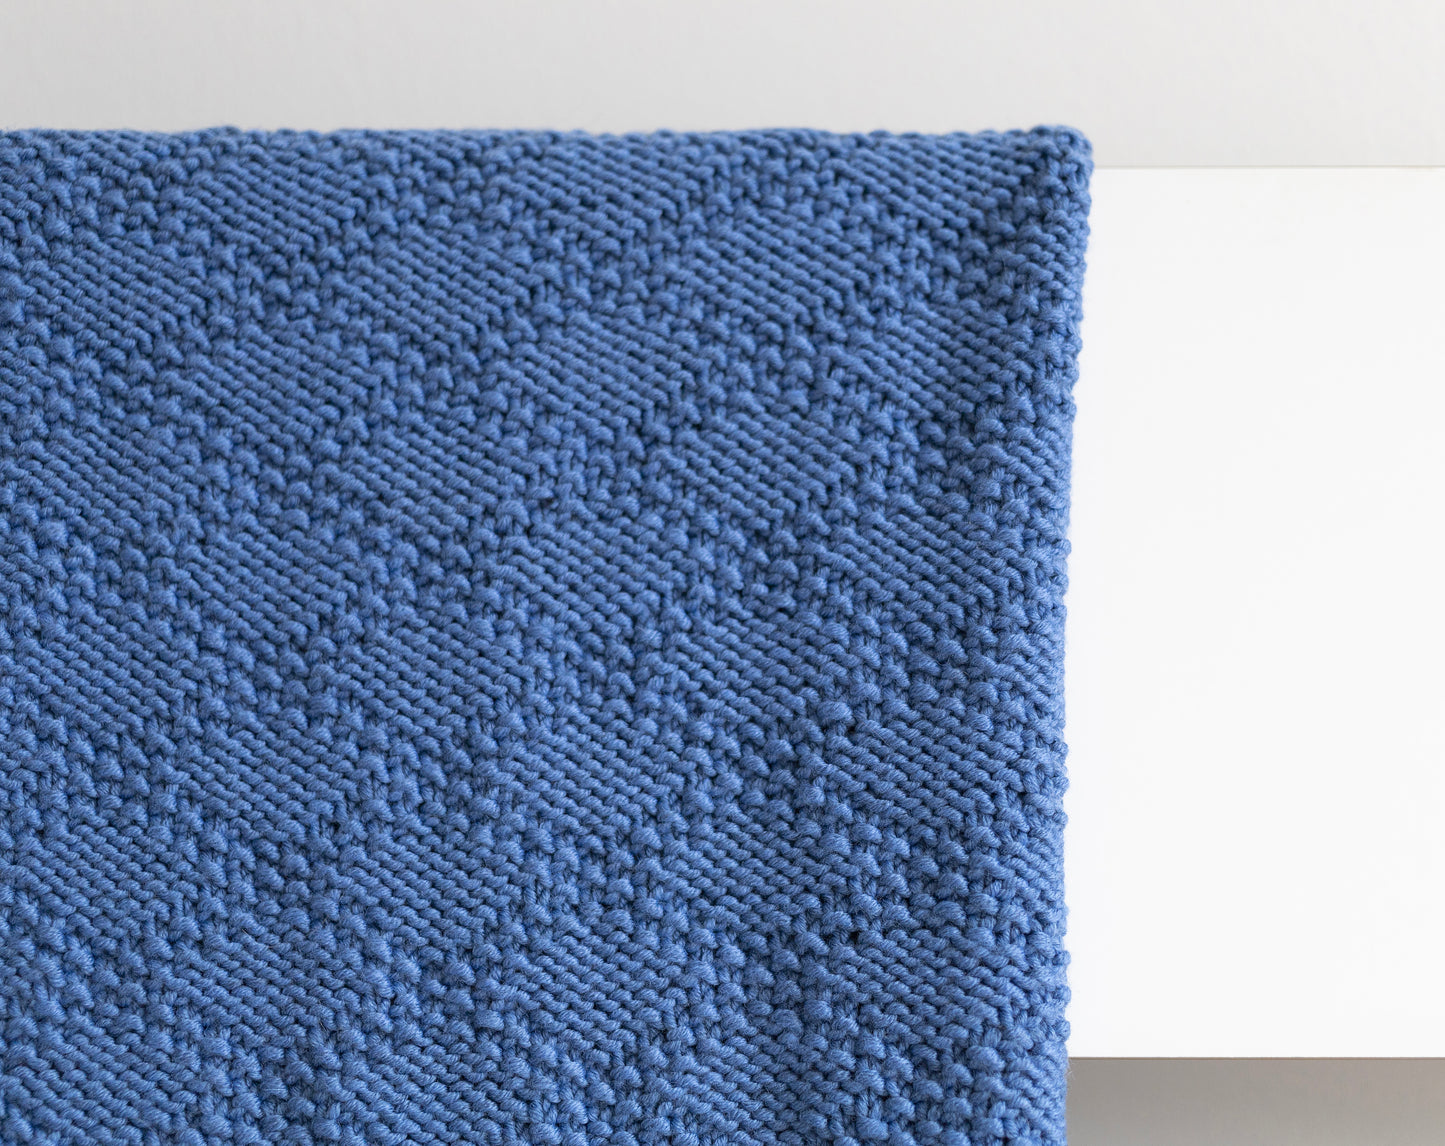 Merino wool hand-knitted baby blanket in Charles Brocade knitting pattern